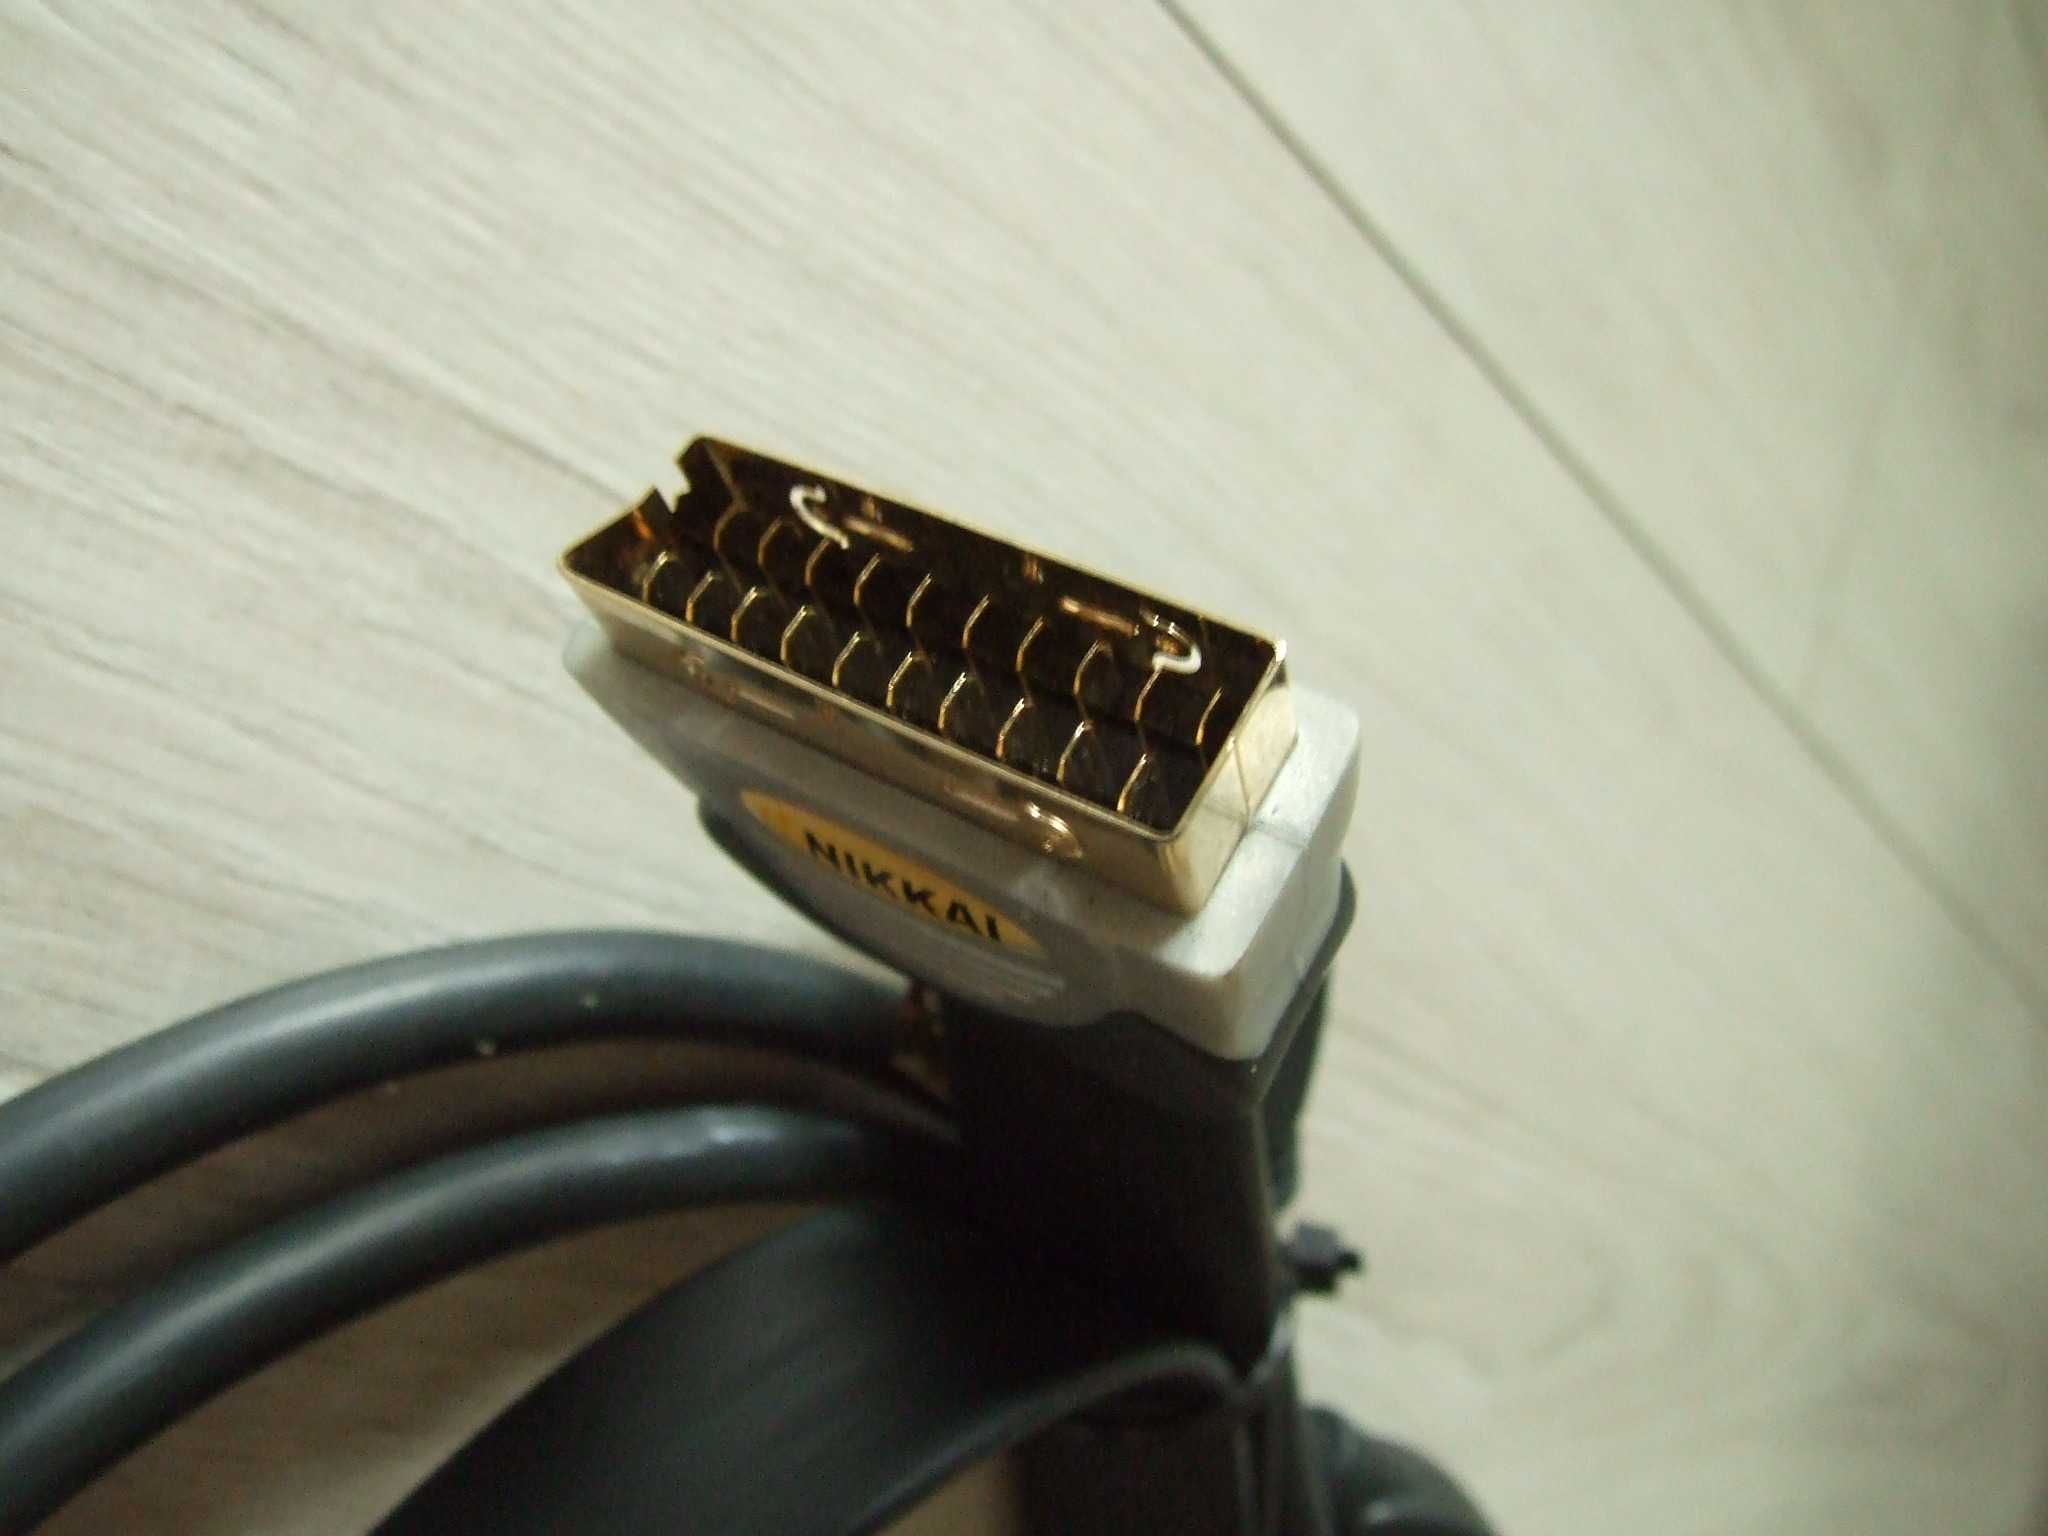 NIKKAI scart 21 pin lead cable 24k gold 2x